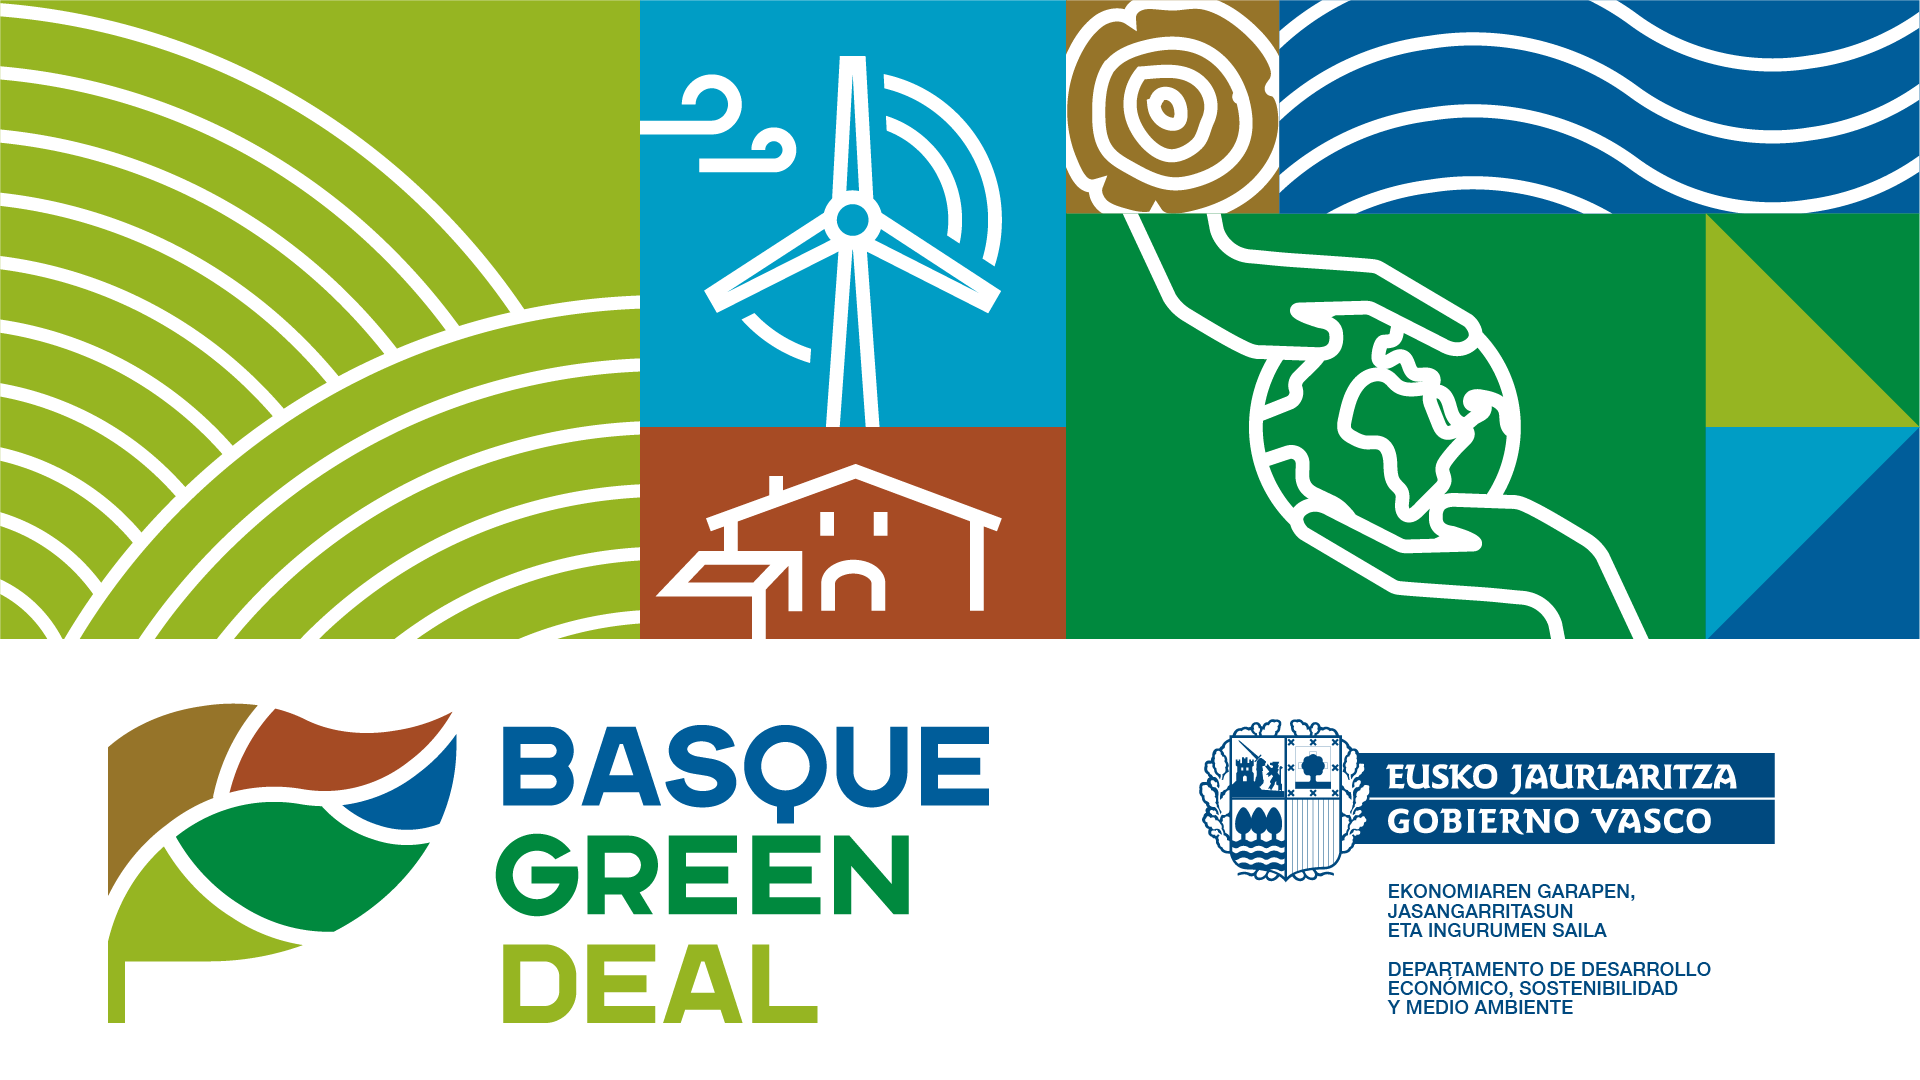 https://www.spri.eus/archivos/2021/05/png/basque-green-deal.png